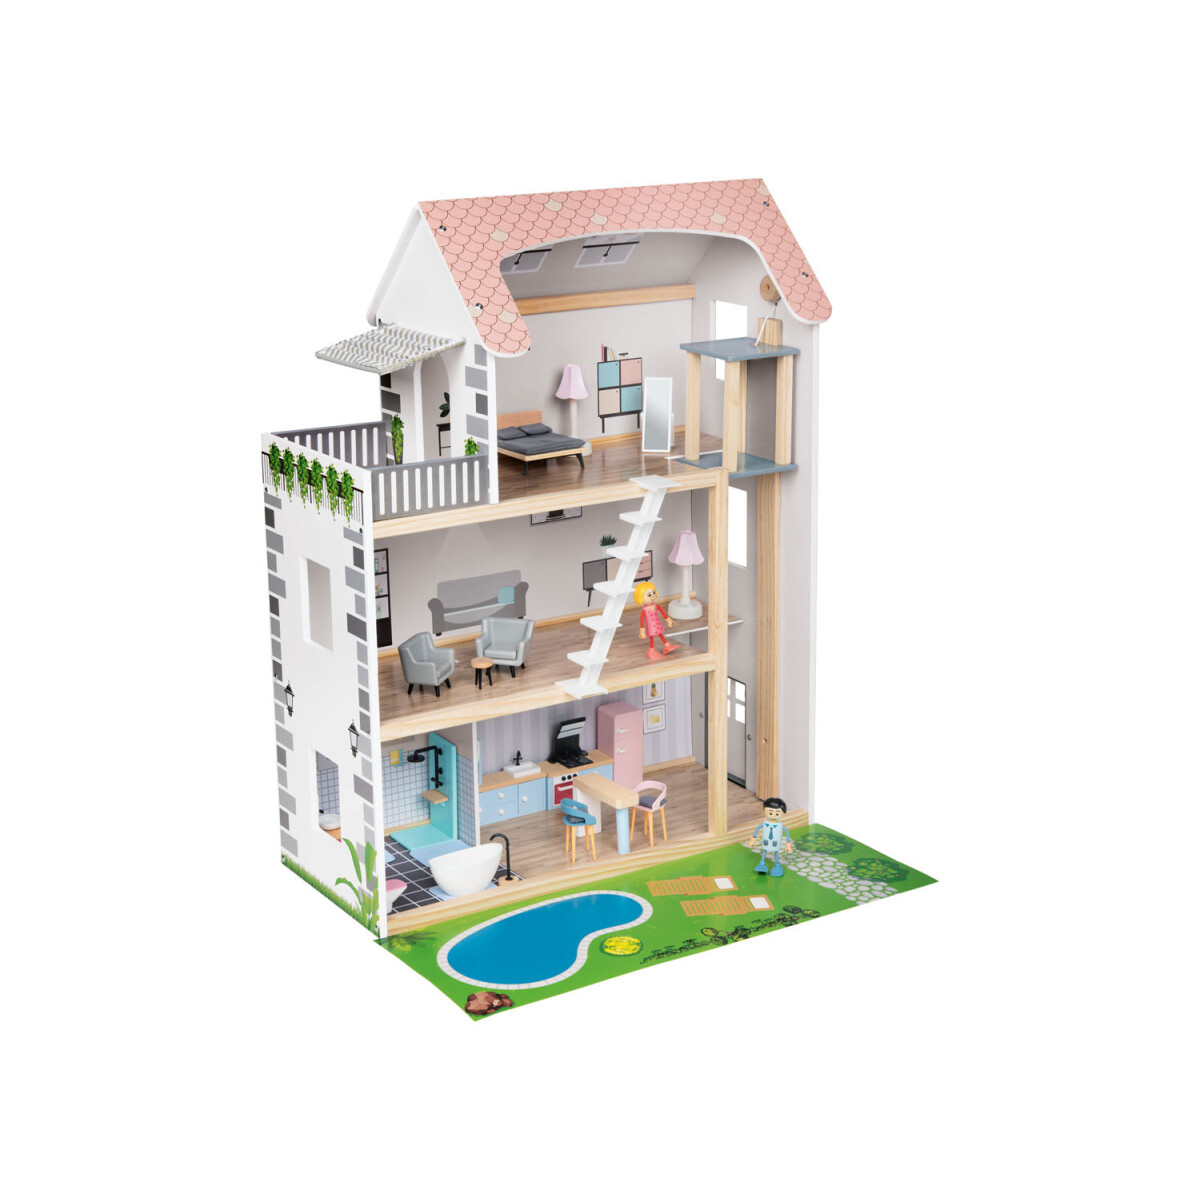 Playtive Puppenhaus aus Holz - B-Ware neuwertig, 29,99 €